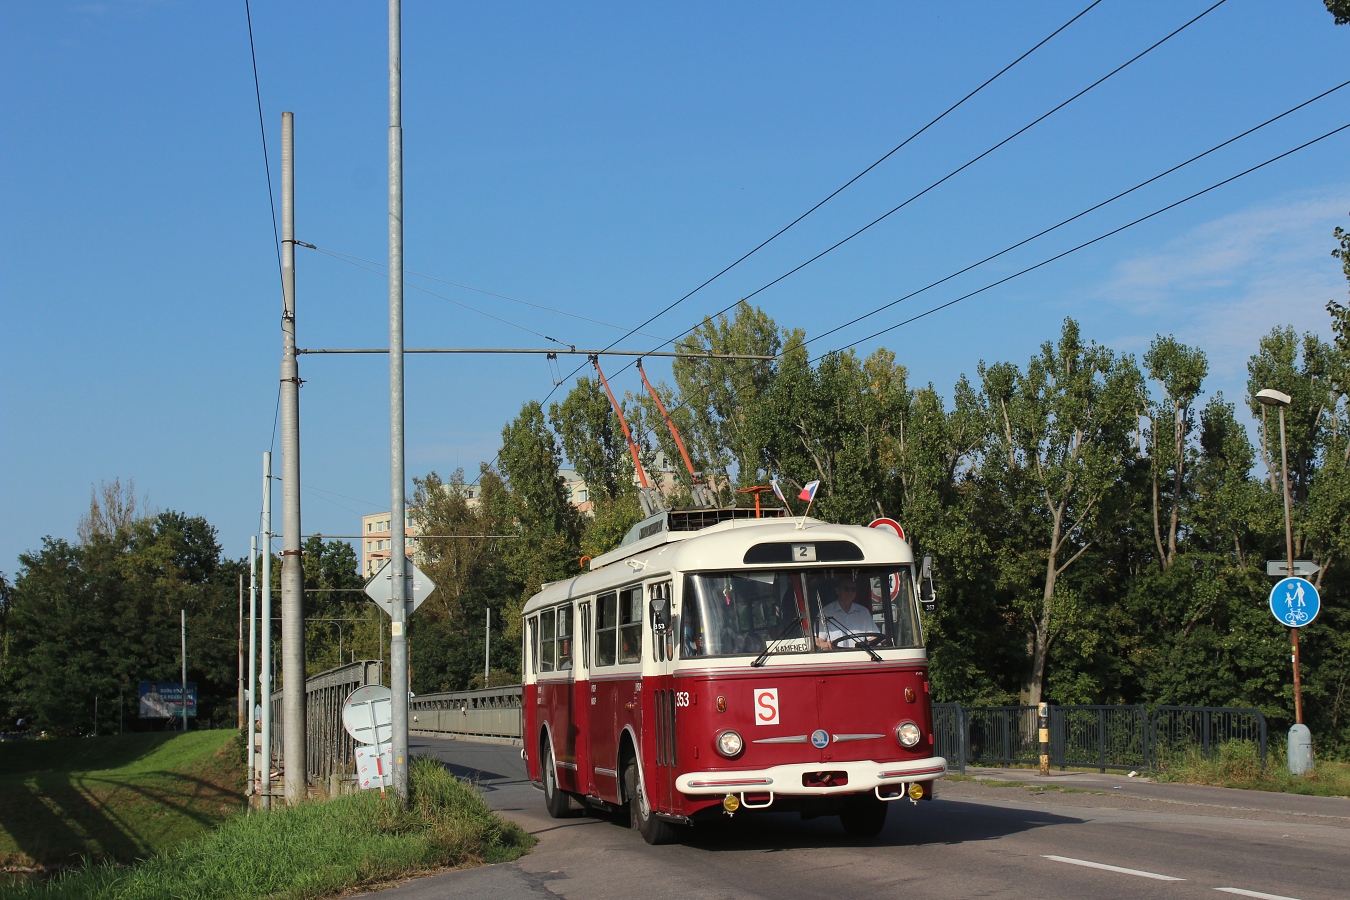 Pardubice, Škoda 9TrHT26 nr. 353